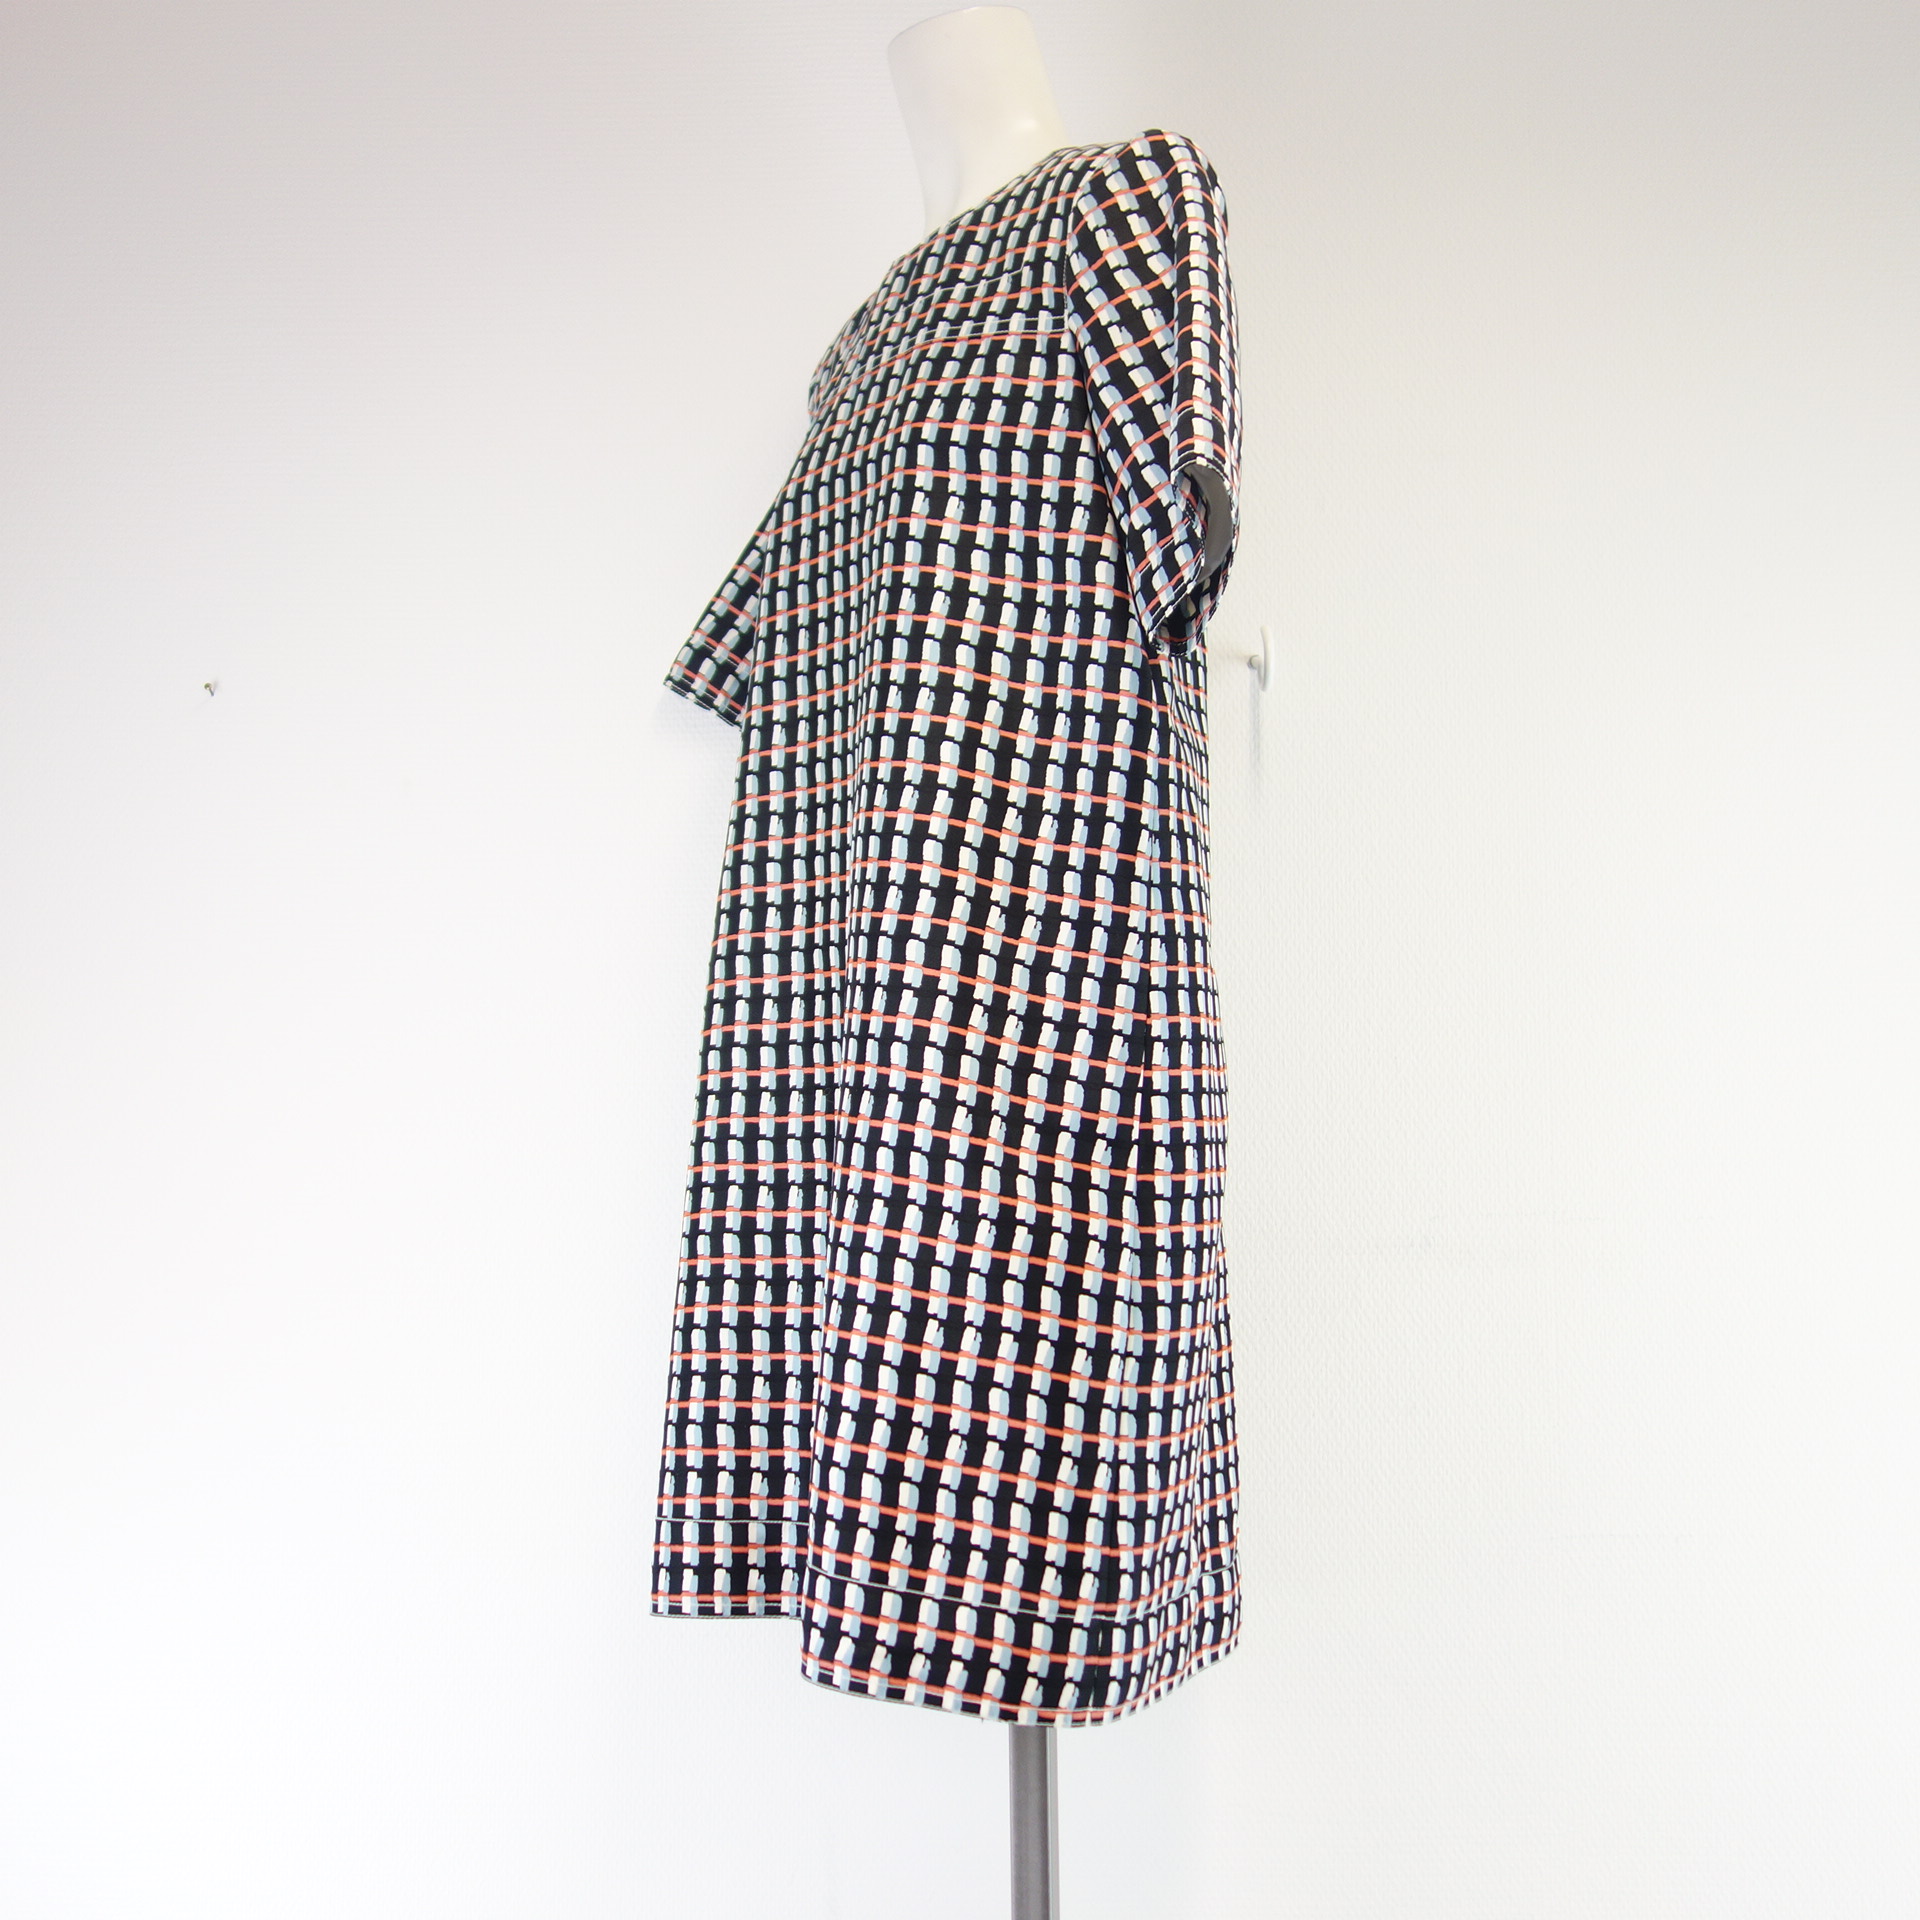 MARNI Damen Kleid Etuikleid Minikleid Mehrfarbig Muster IT 44 DE 38 